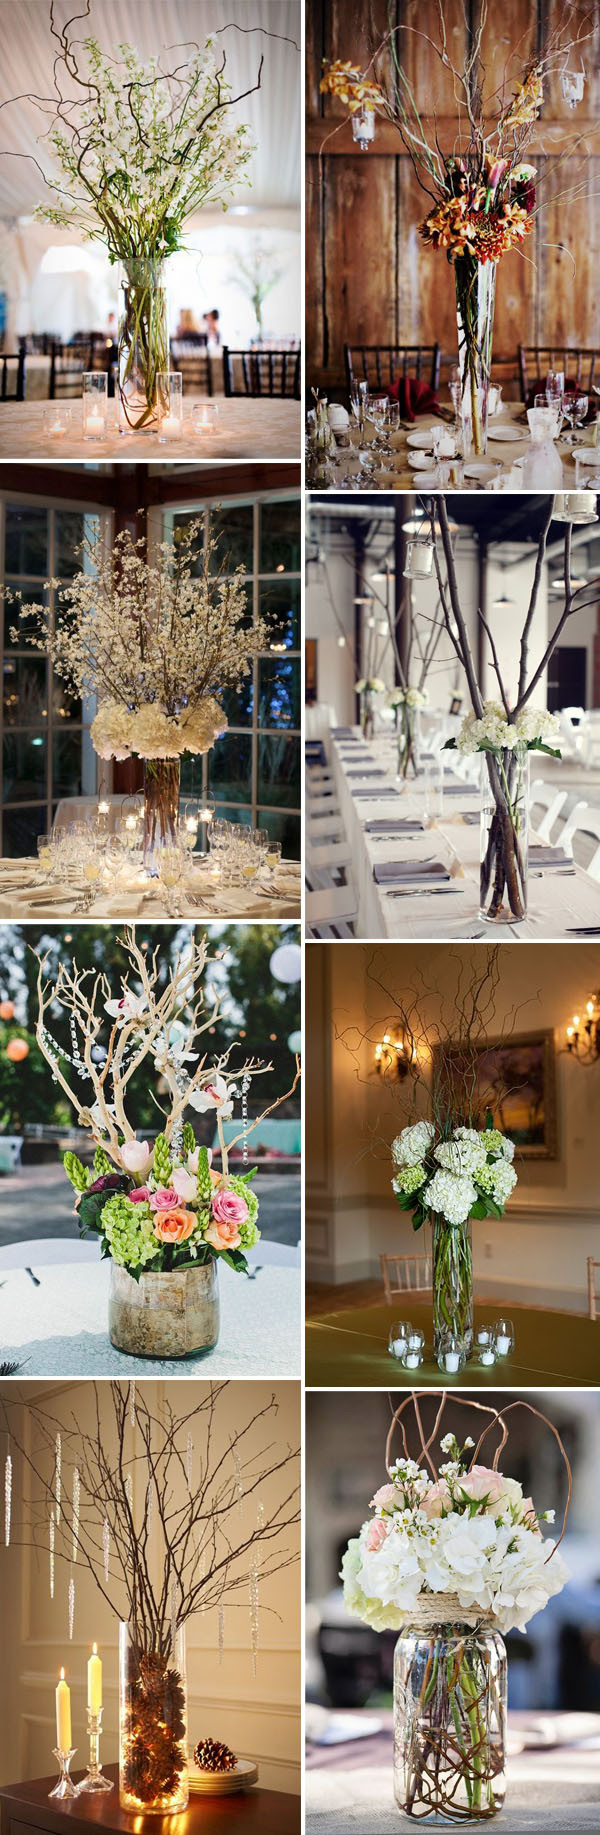 DIY Wedding Floral Centerpieces
 28 Creative & Bud friendly DIY Wedding Decoration Ideas